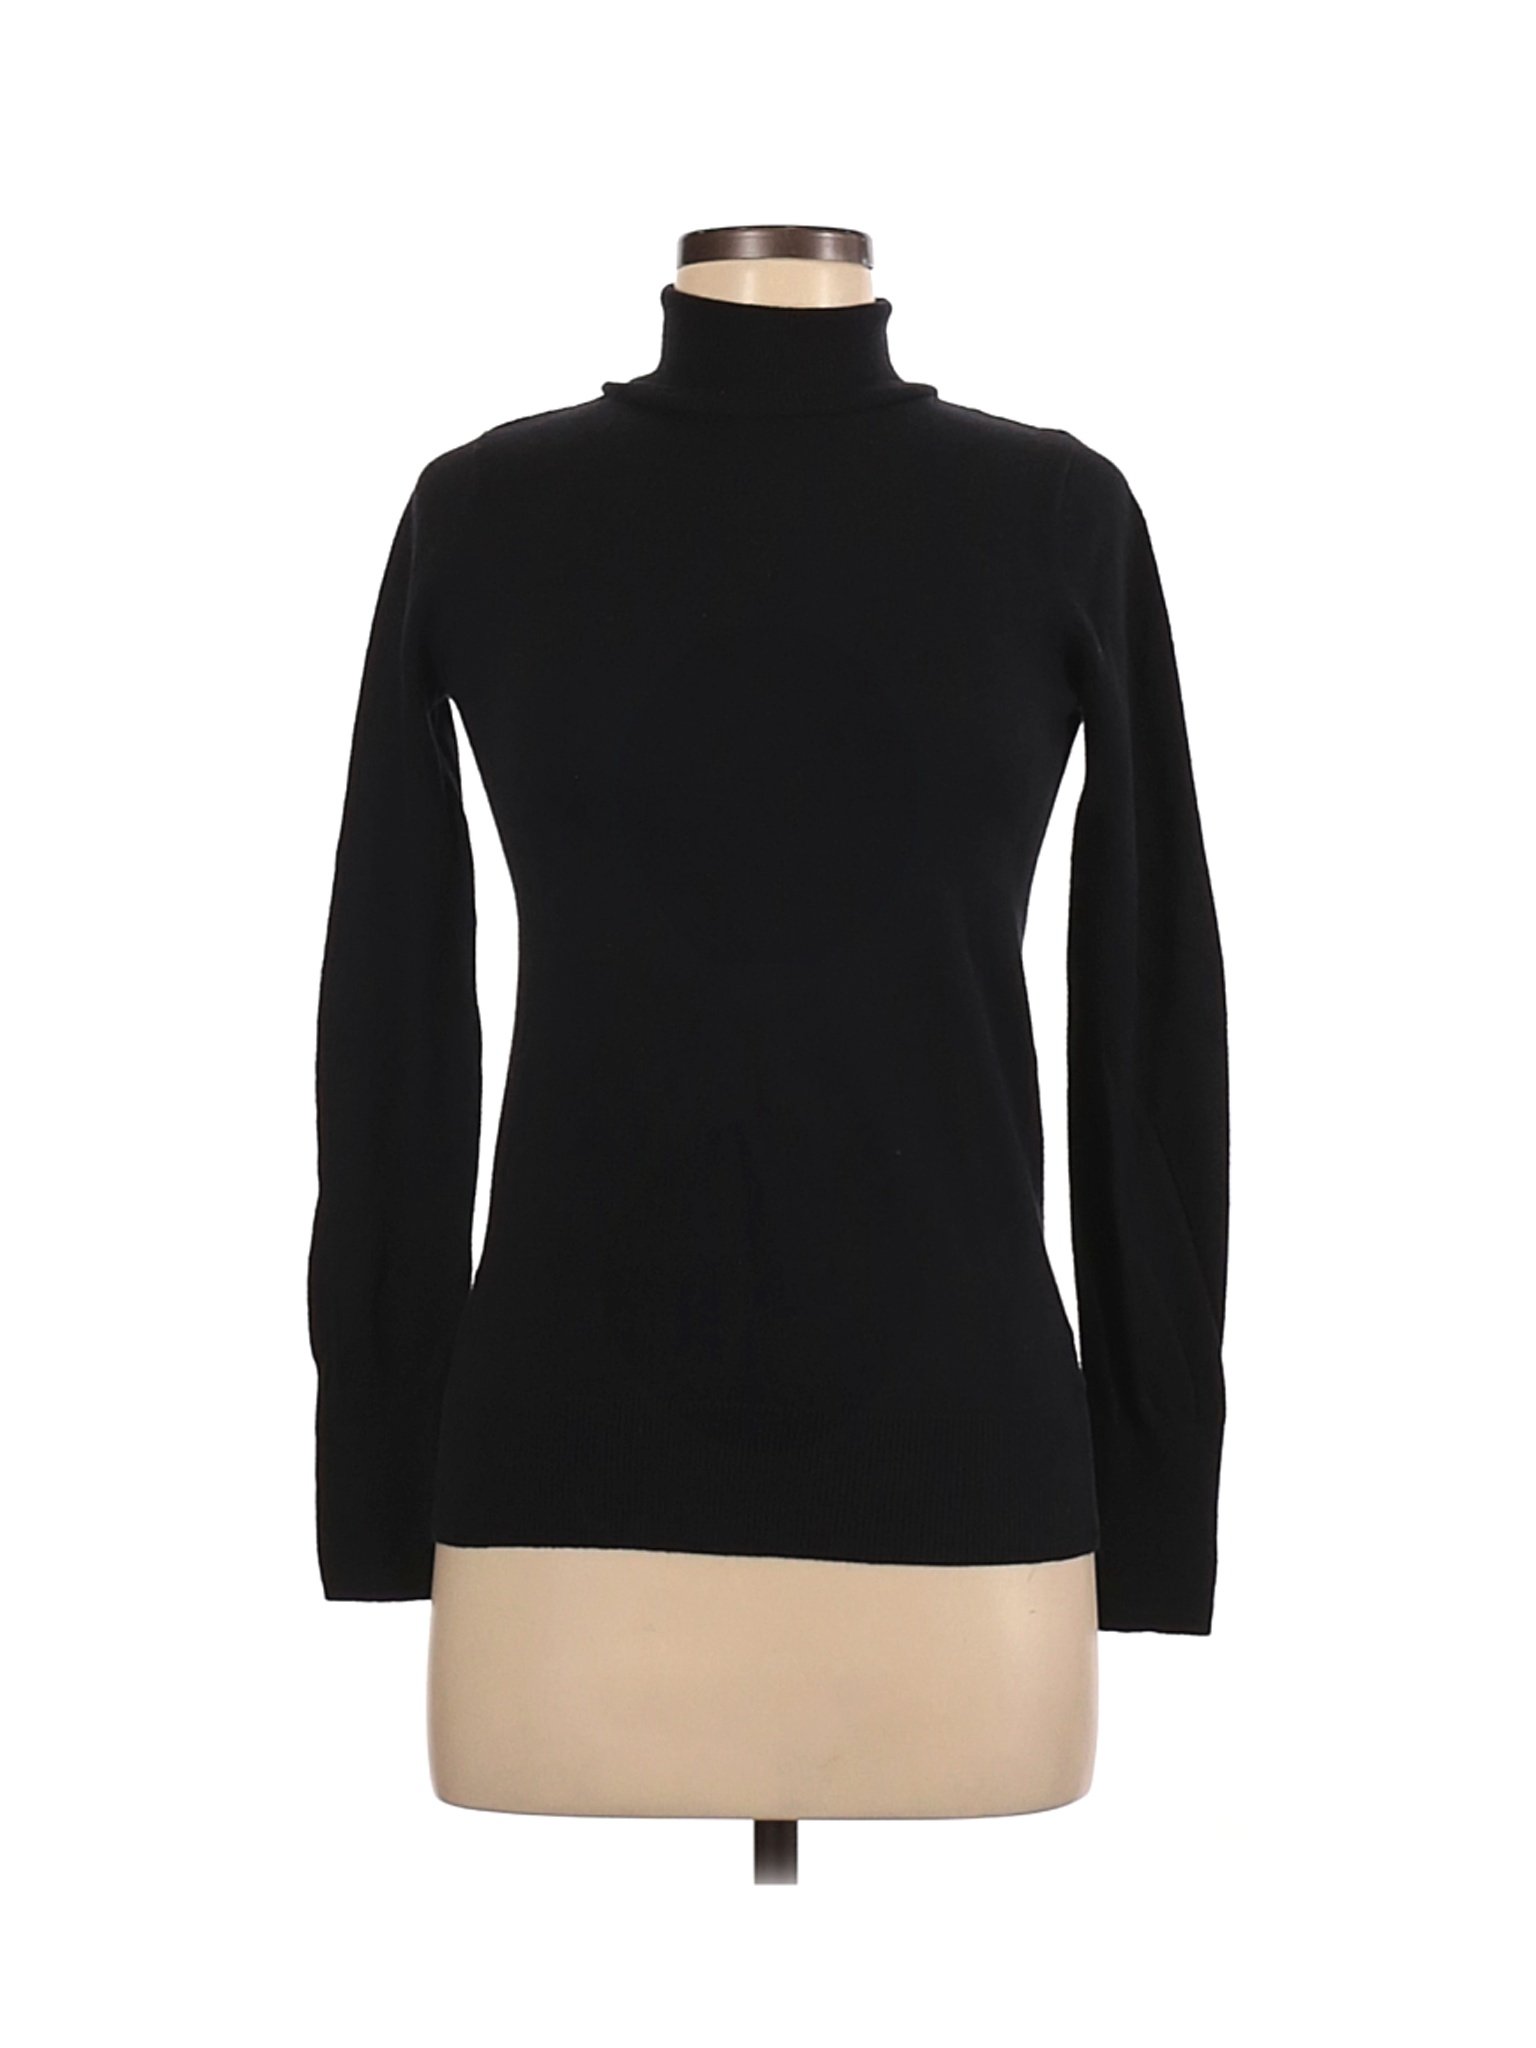 Old Navy Women Black Turtleneck Sweater S | eBay